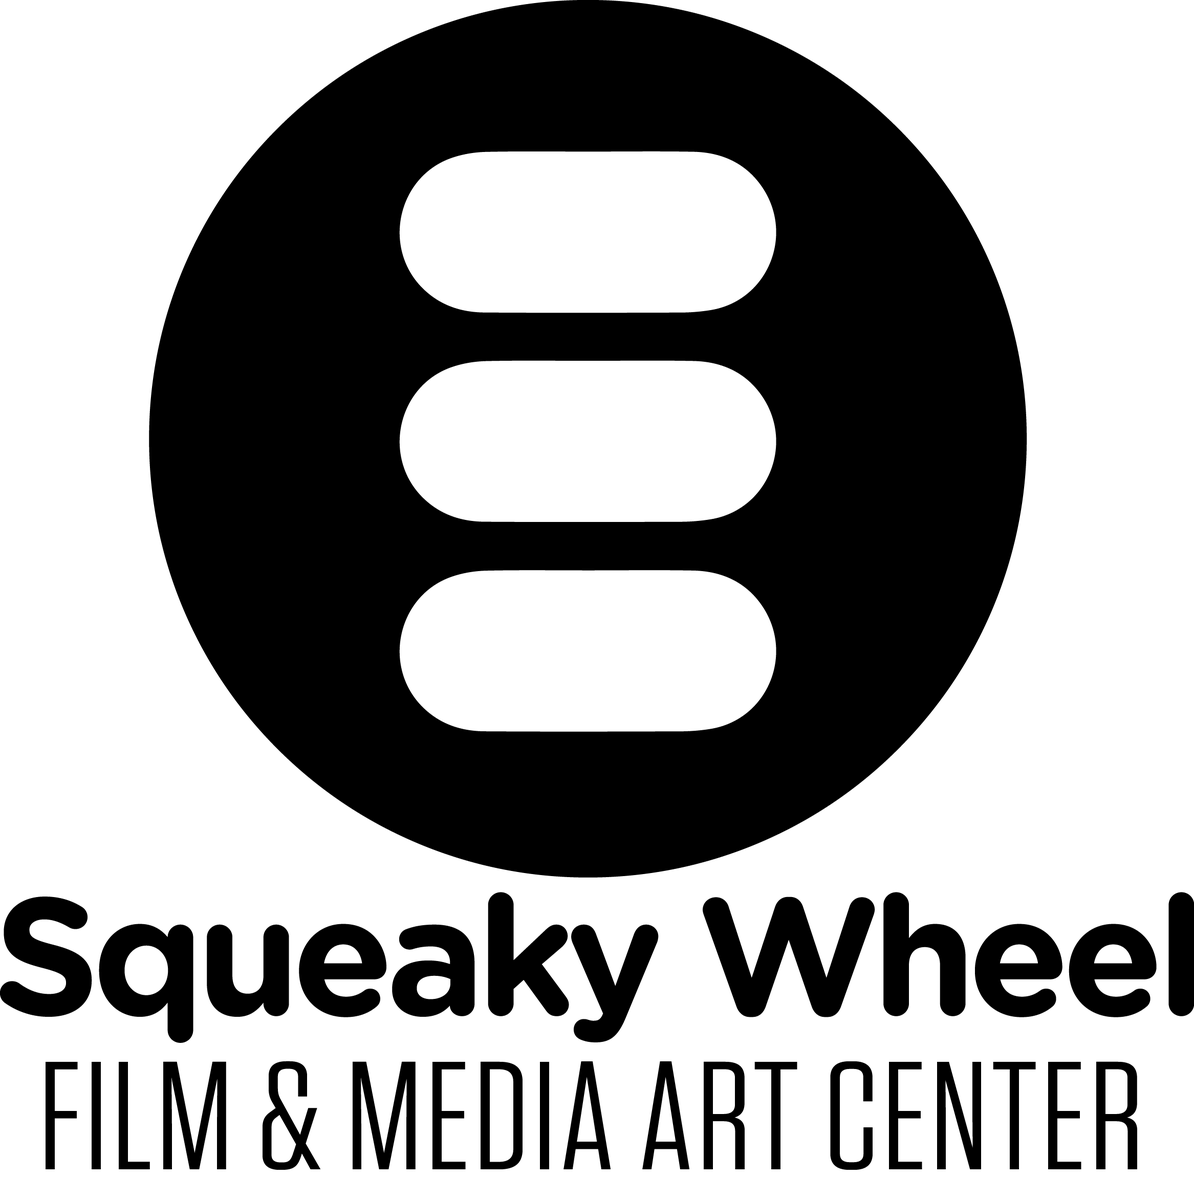 Squeaky Logo - Squeaky Wheel Film & Media Art Center